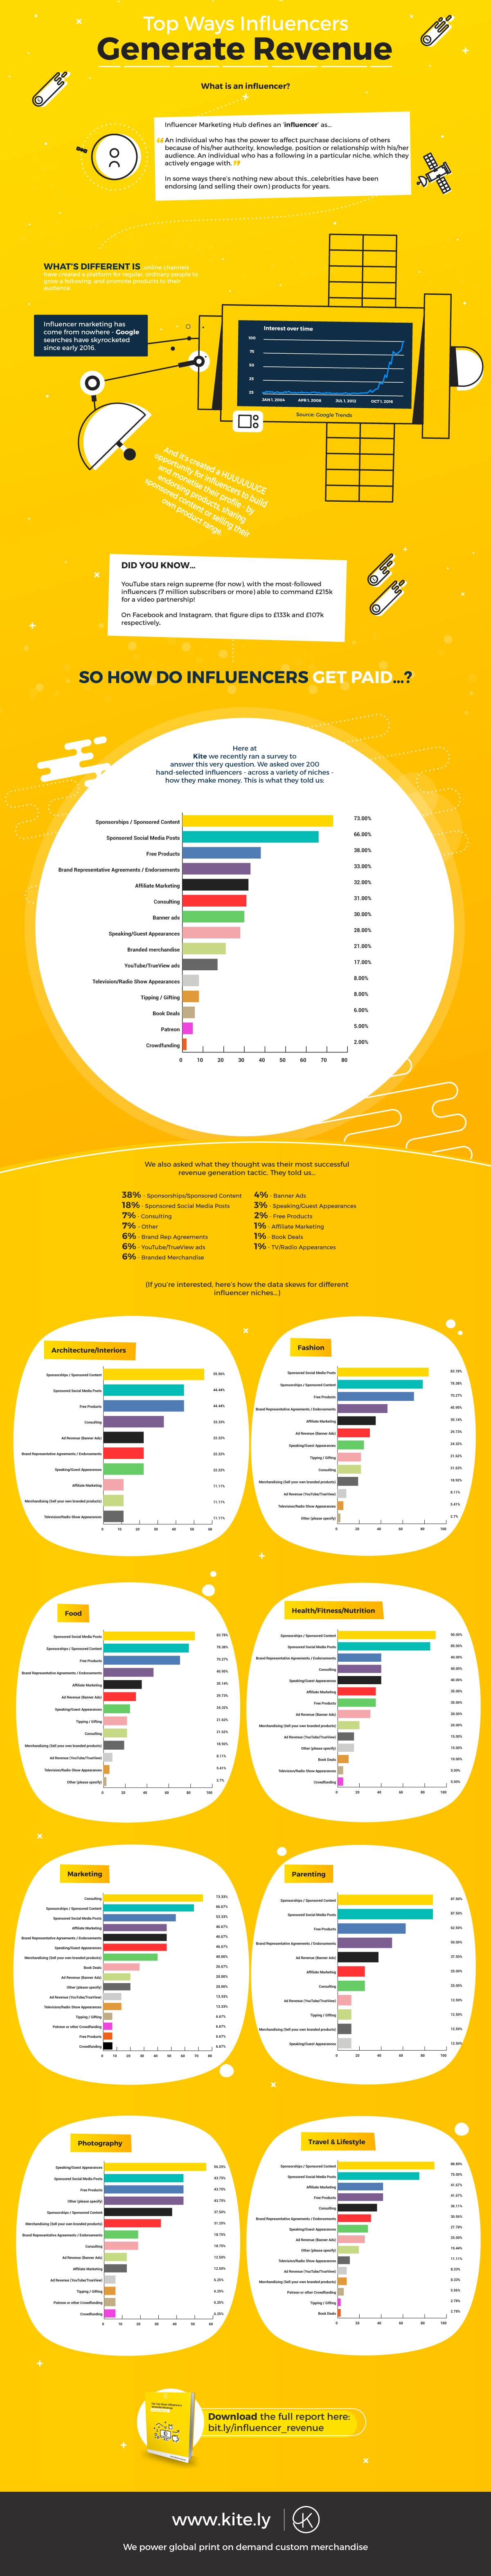 Infographic: Top ways influencers generate revenue